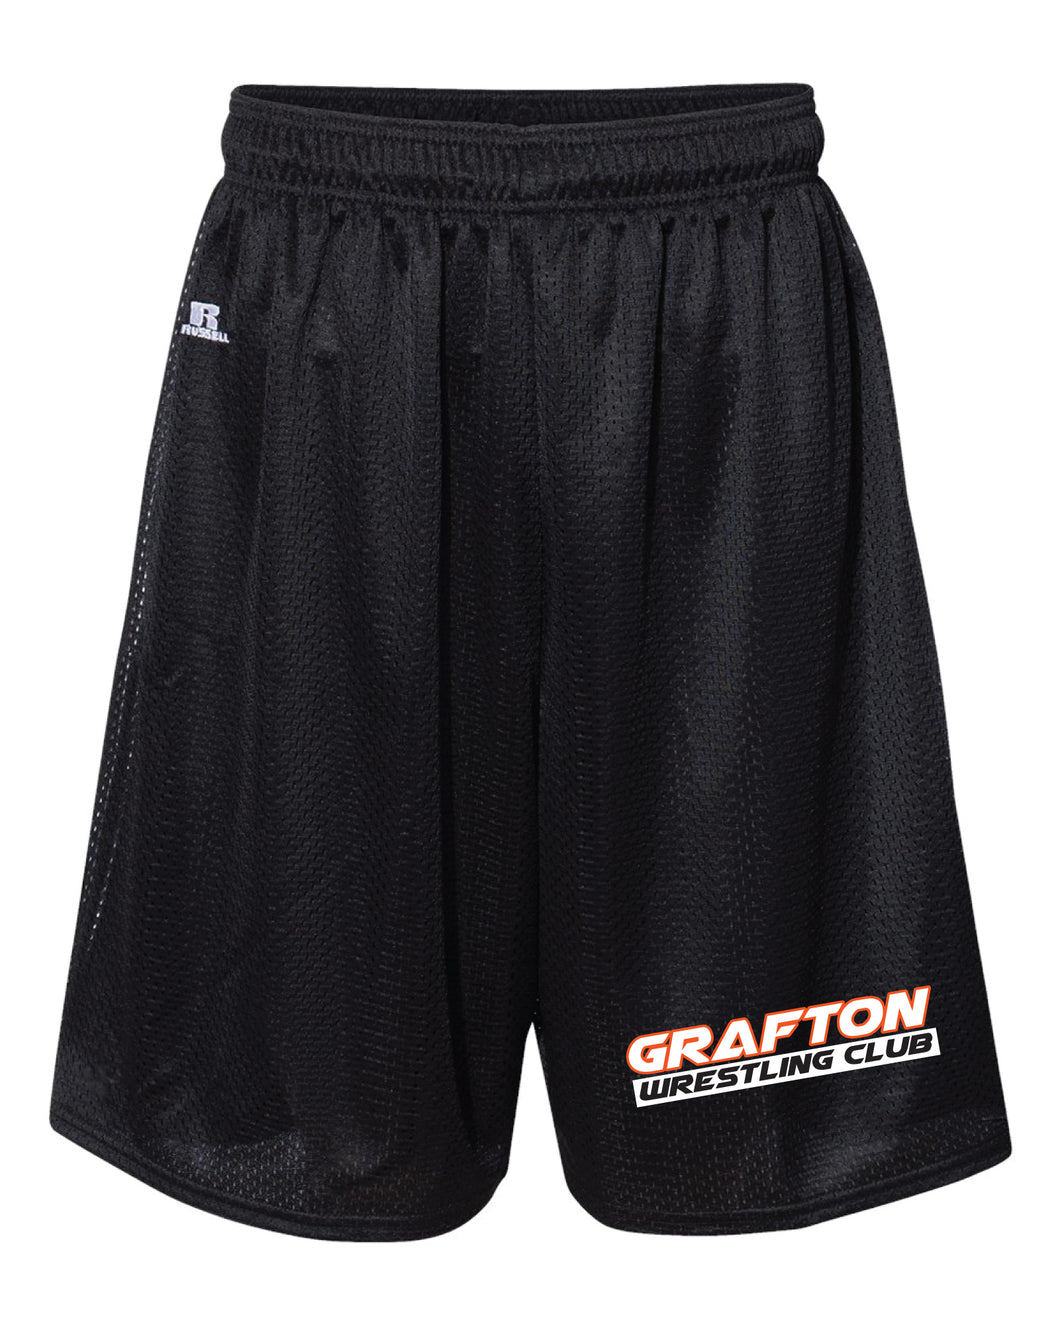 Grafton Wrestling Russell Athletic Tech Shorts - Black - 5KounT